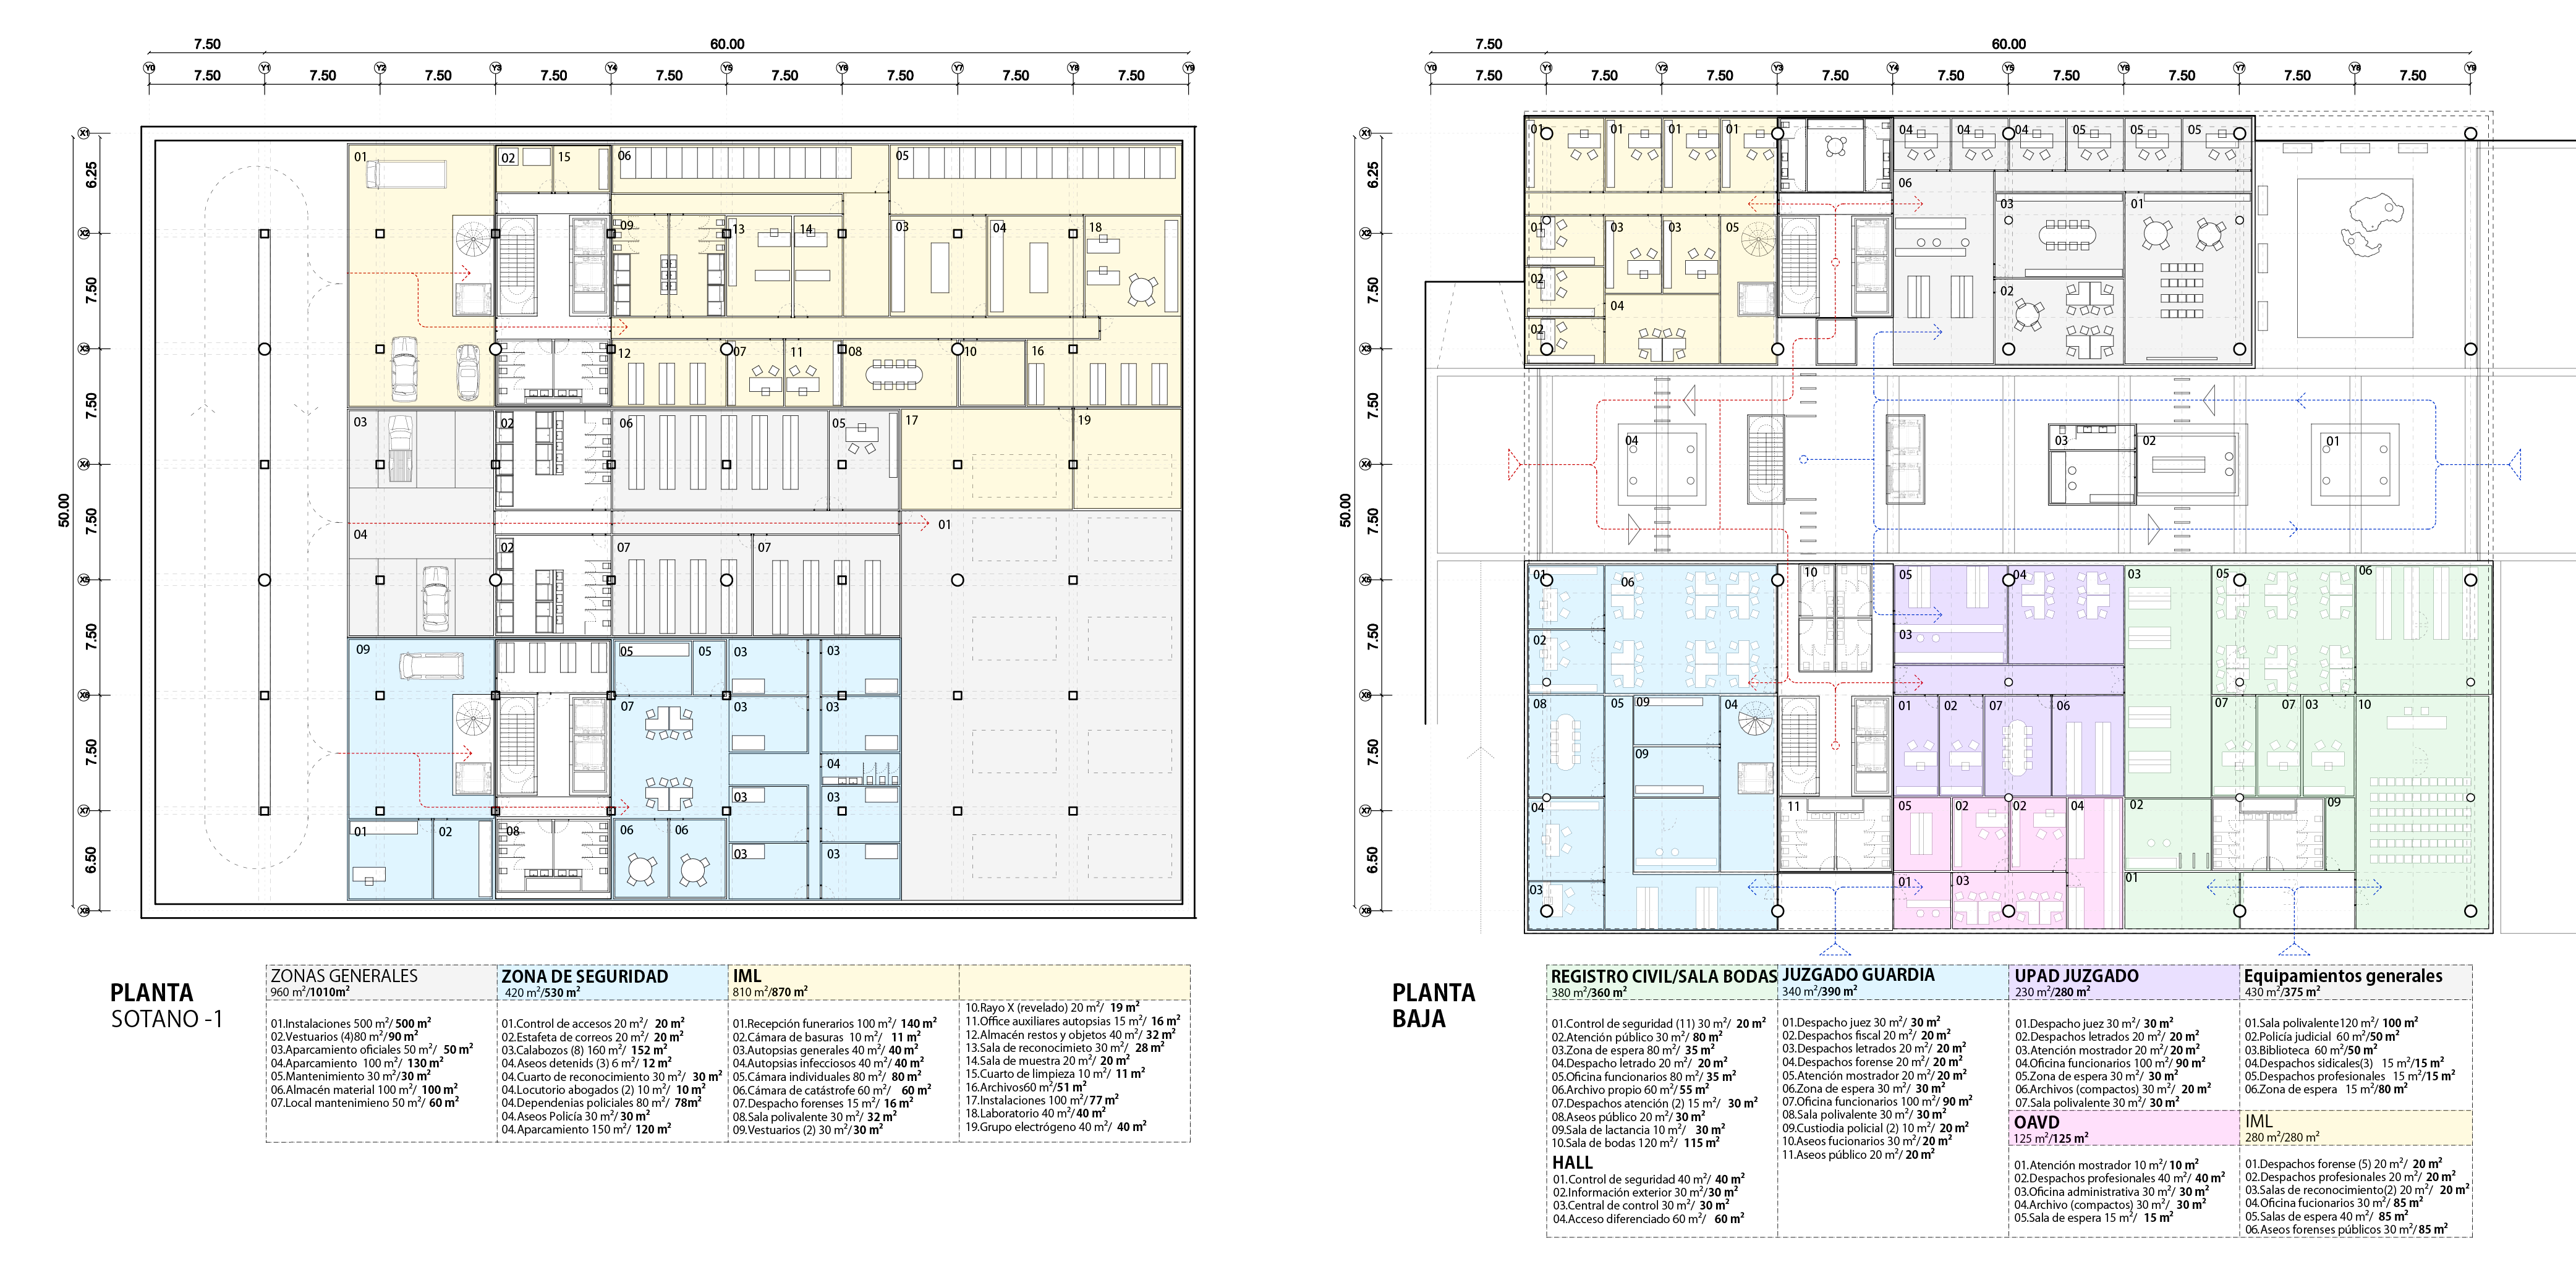 02 Floorplans: -1 level , Ground level